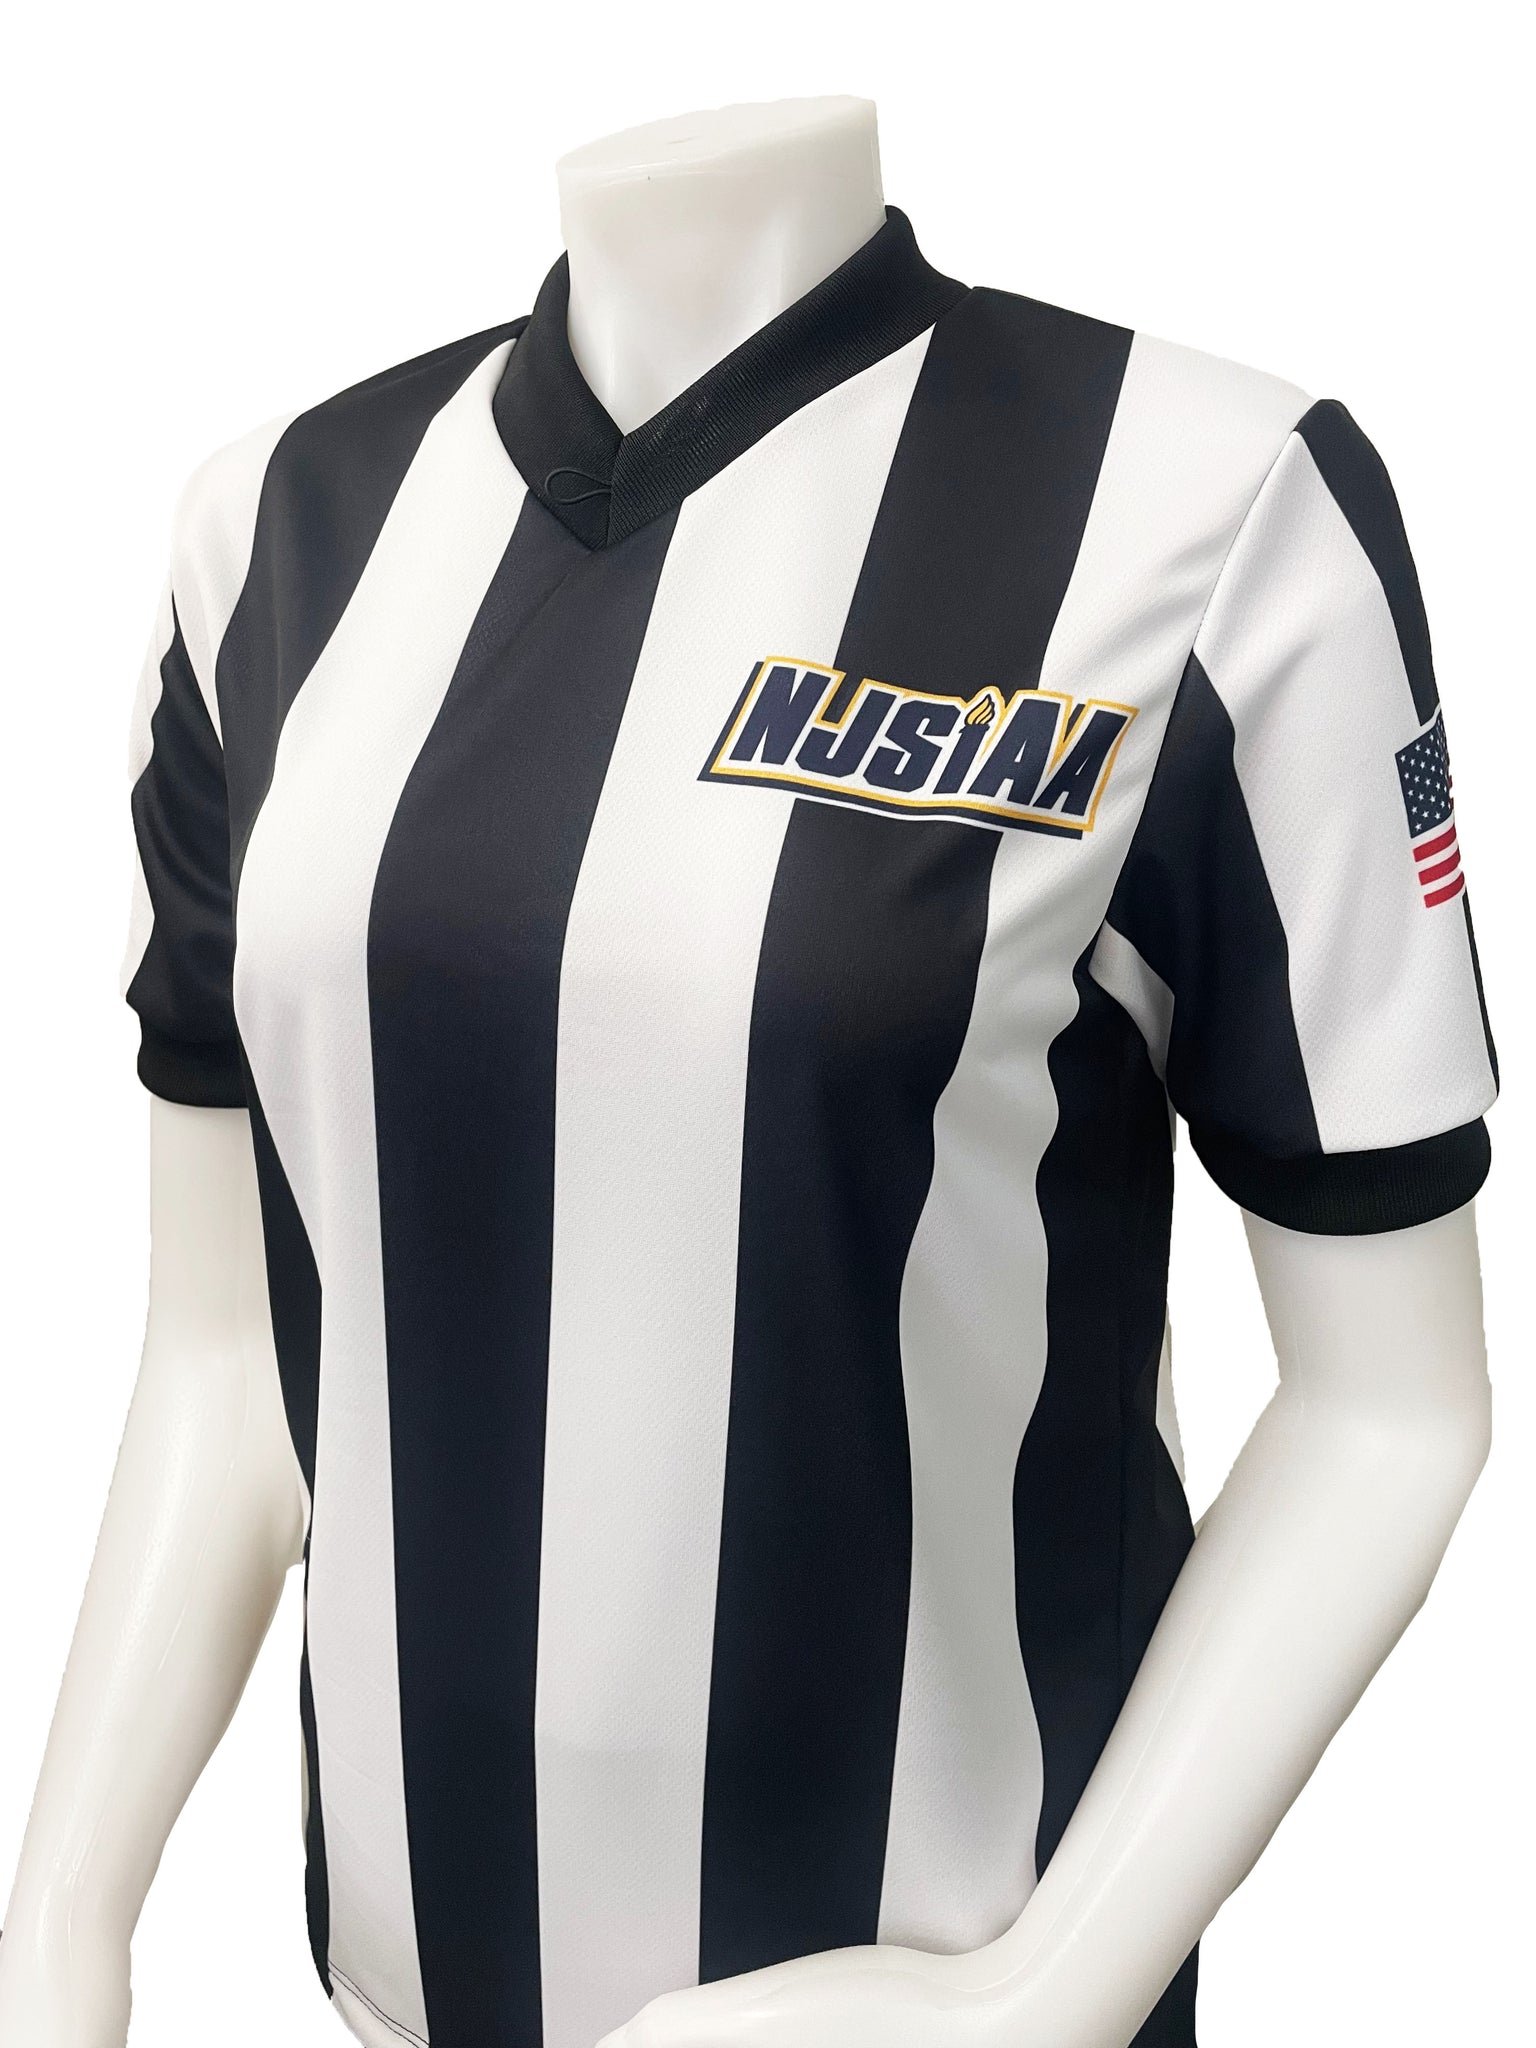 USA239NJ-607 - Smitty "Made in USA" - "BODY FLEX" NJSIAA Women's Basketball 2 1/4" Stripe Short Sleeve Shirt